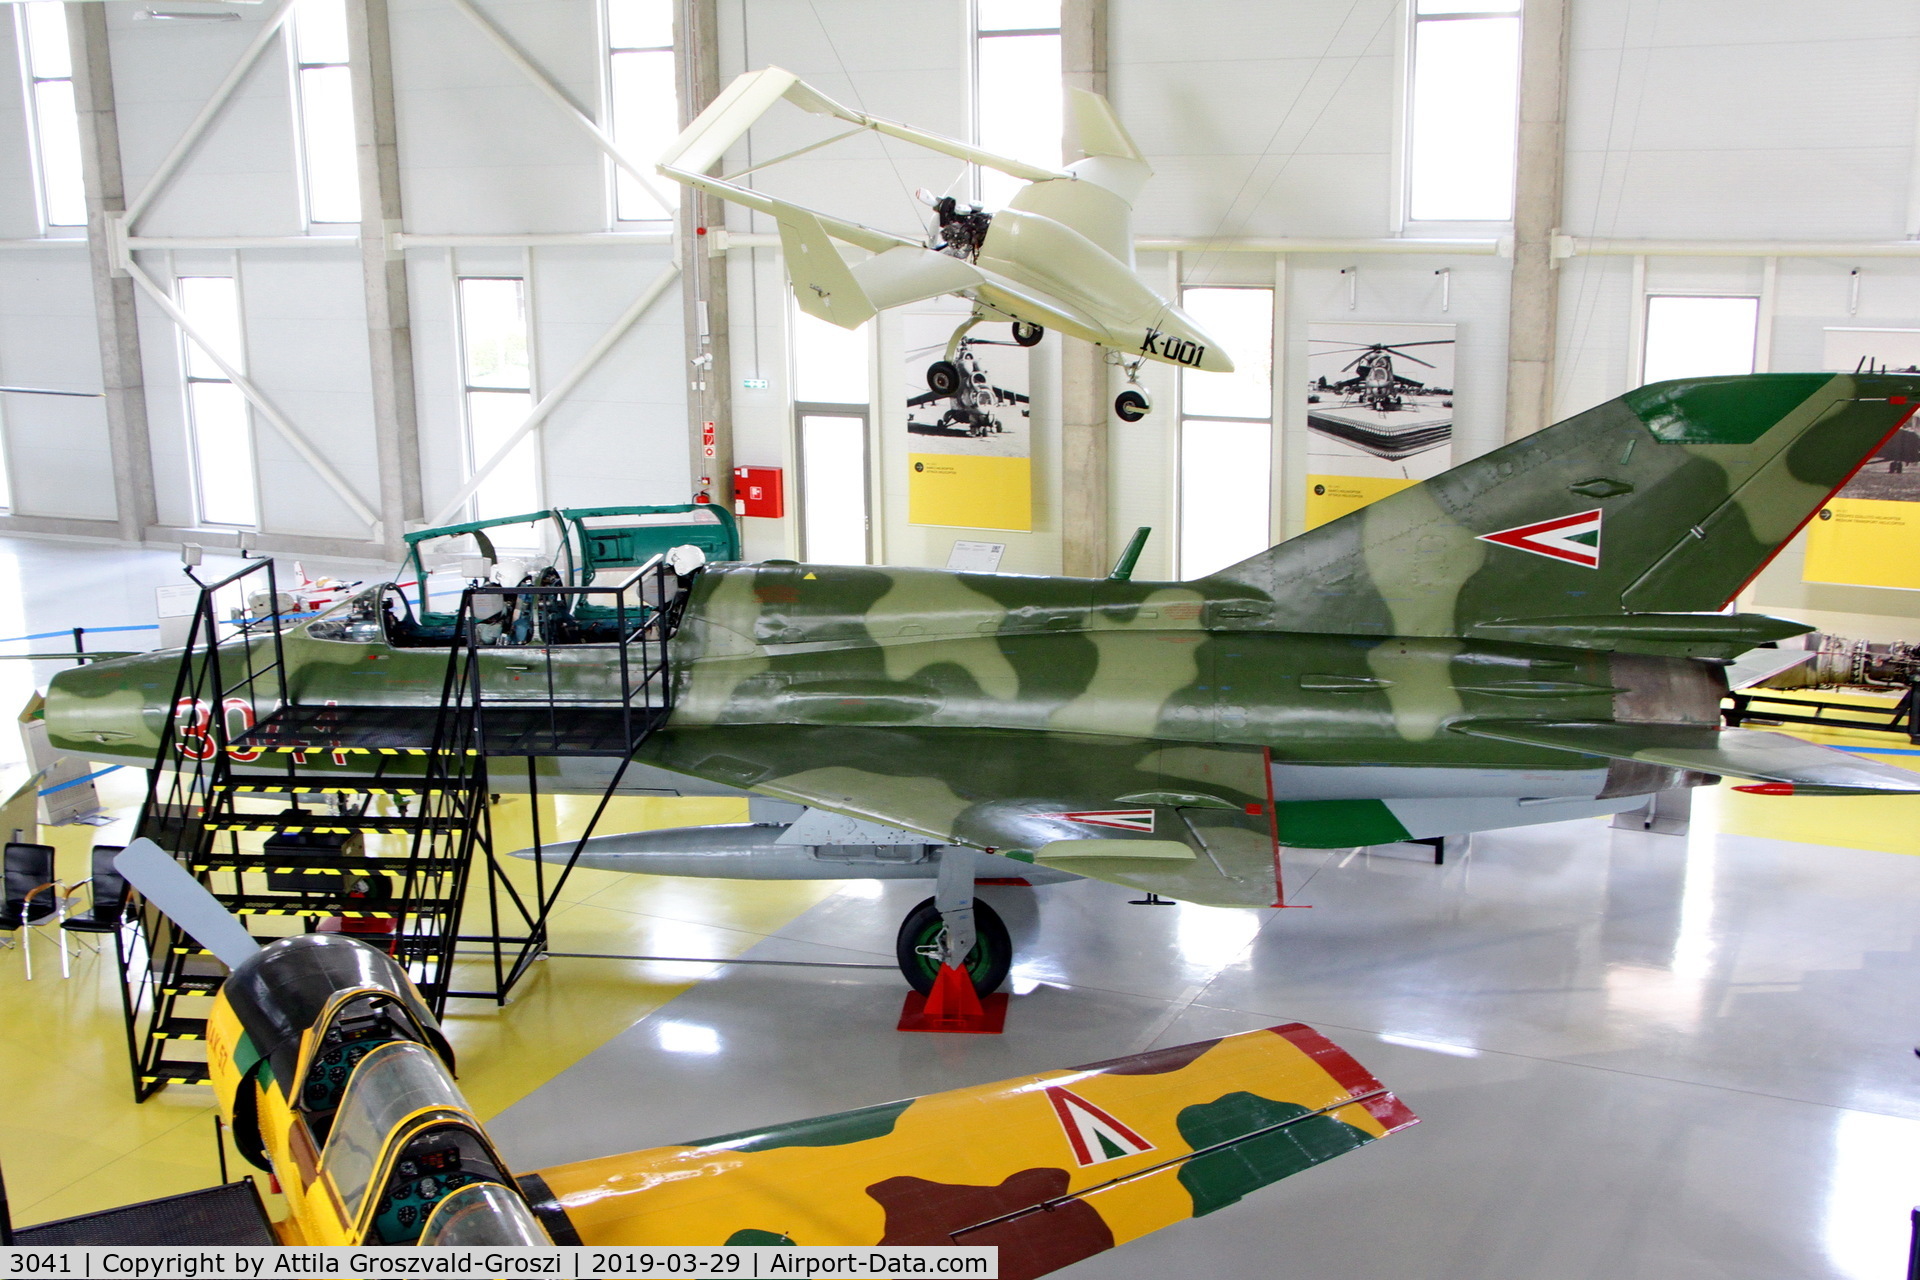 3041, 1974 Mikoyan-Gurevich MiG-21UM C/N 516903041, RepTár. Szolnok aviation history museum, Hungary